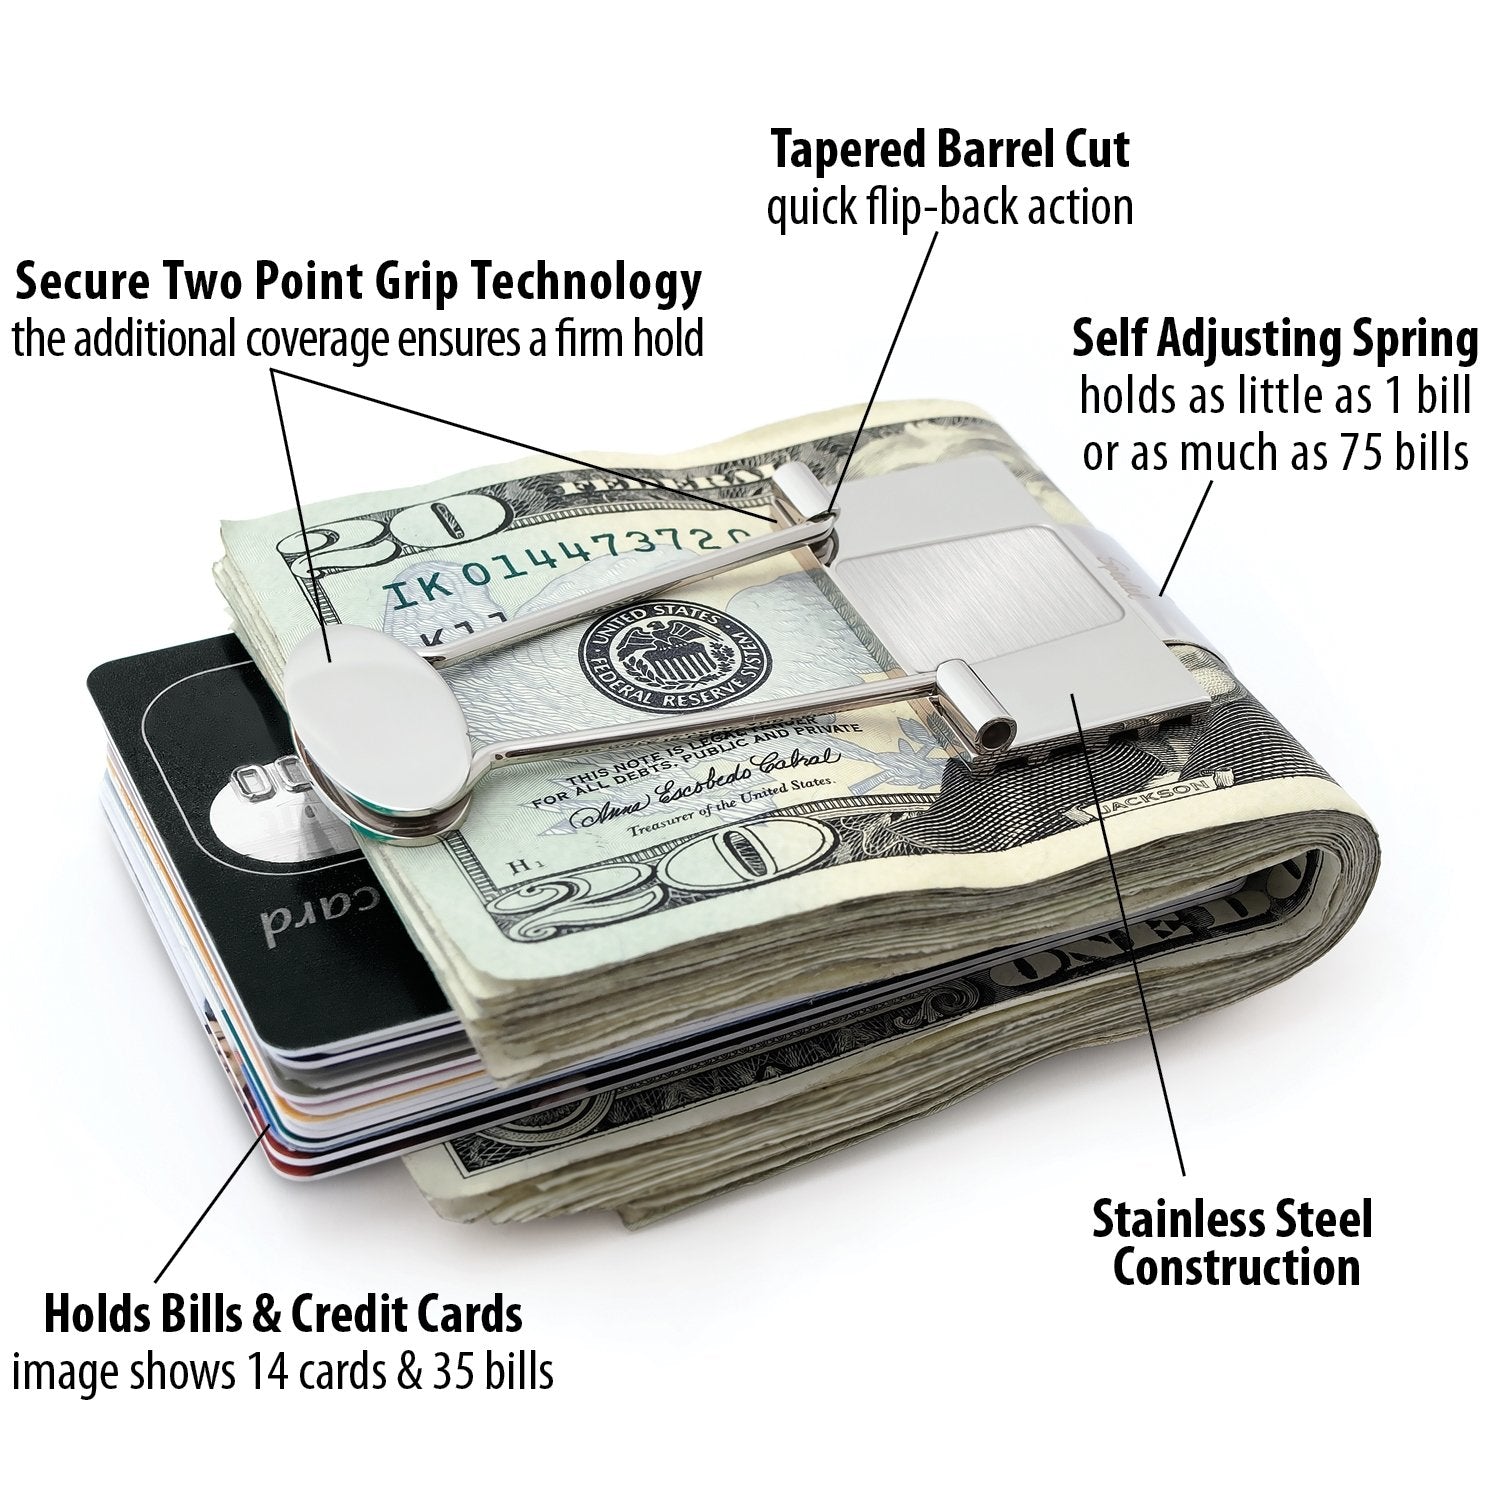 Prada - Credit Card Holder with Money Clip